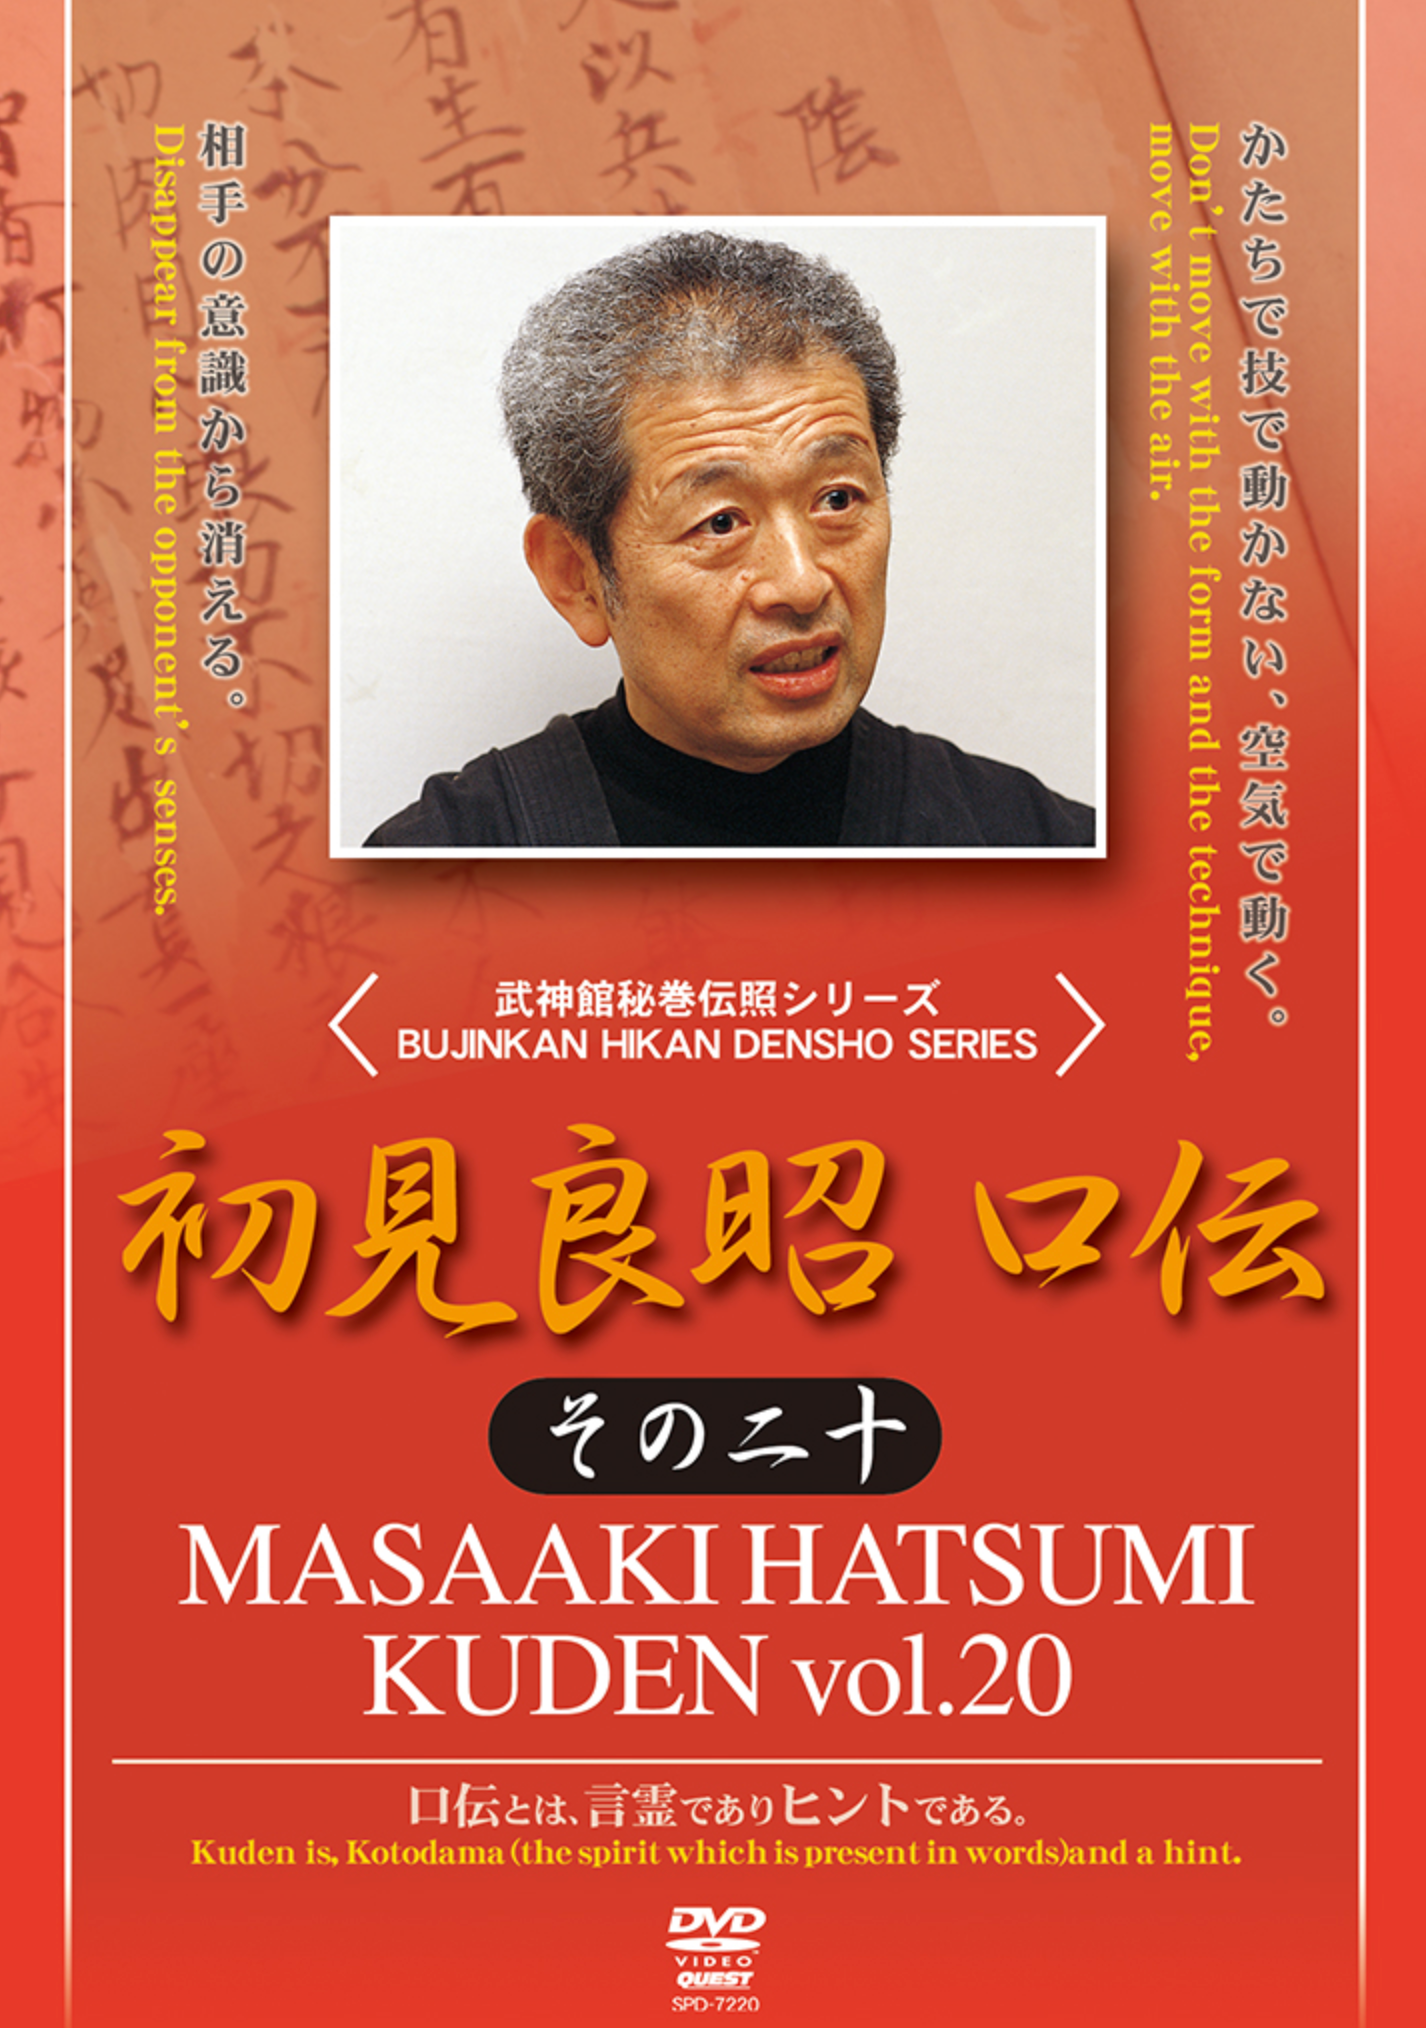 Kuden Vol 20 DVD with Masaaki Hatsumi - Budovideos Inc